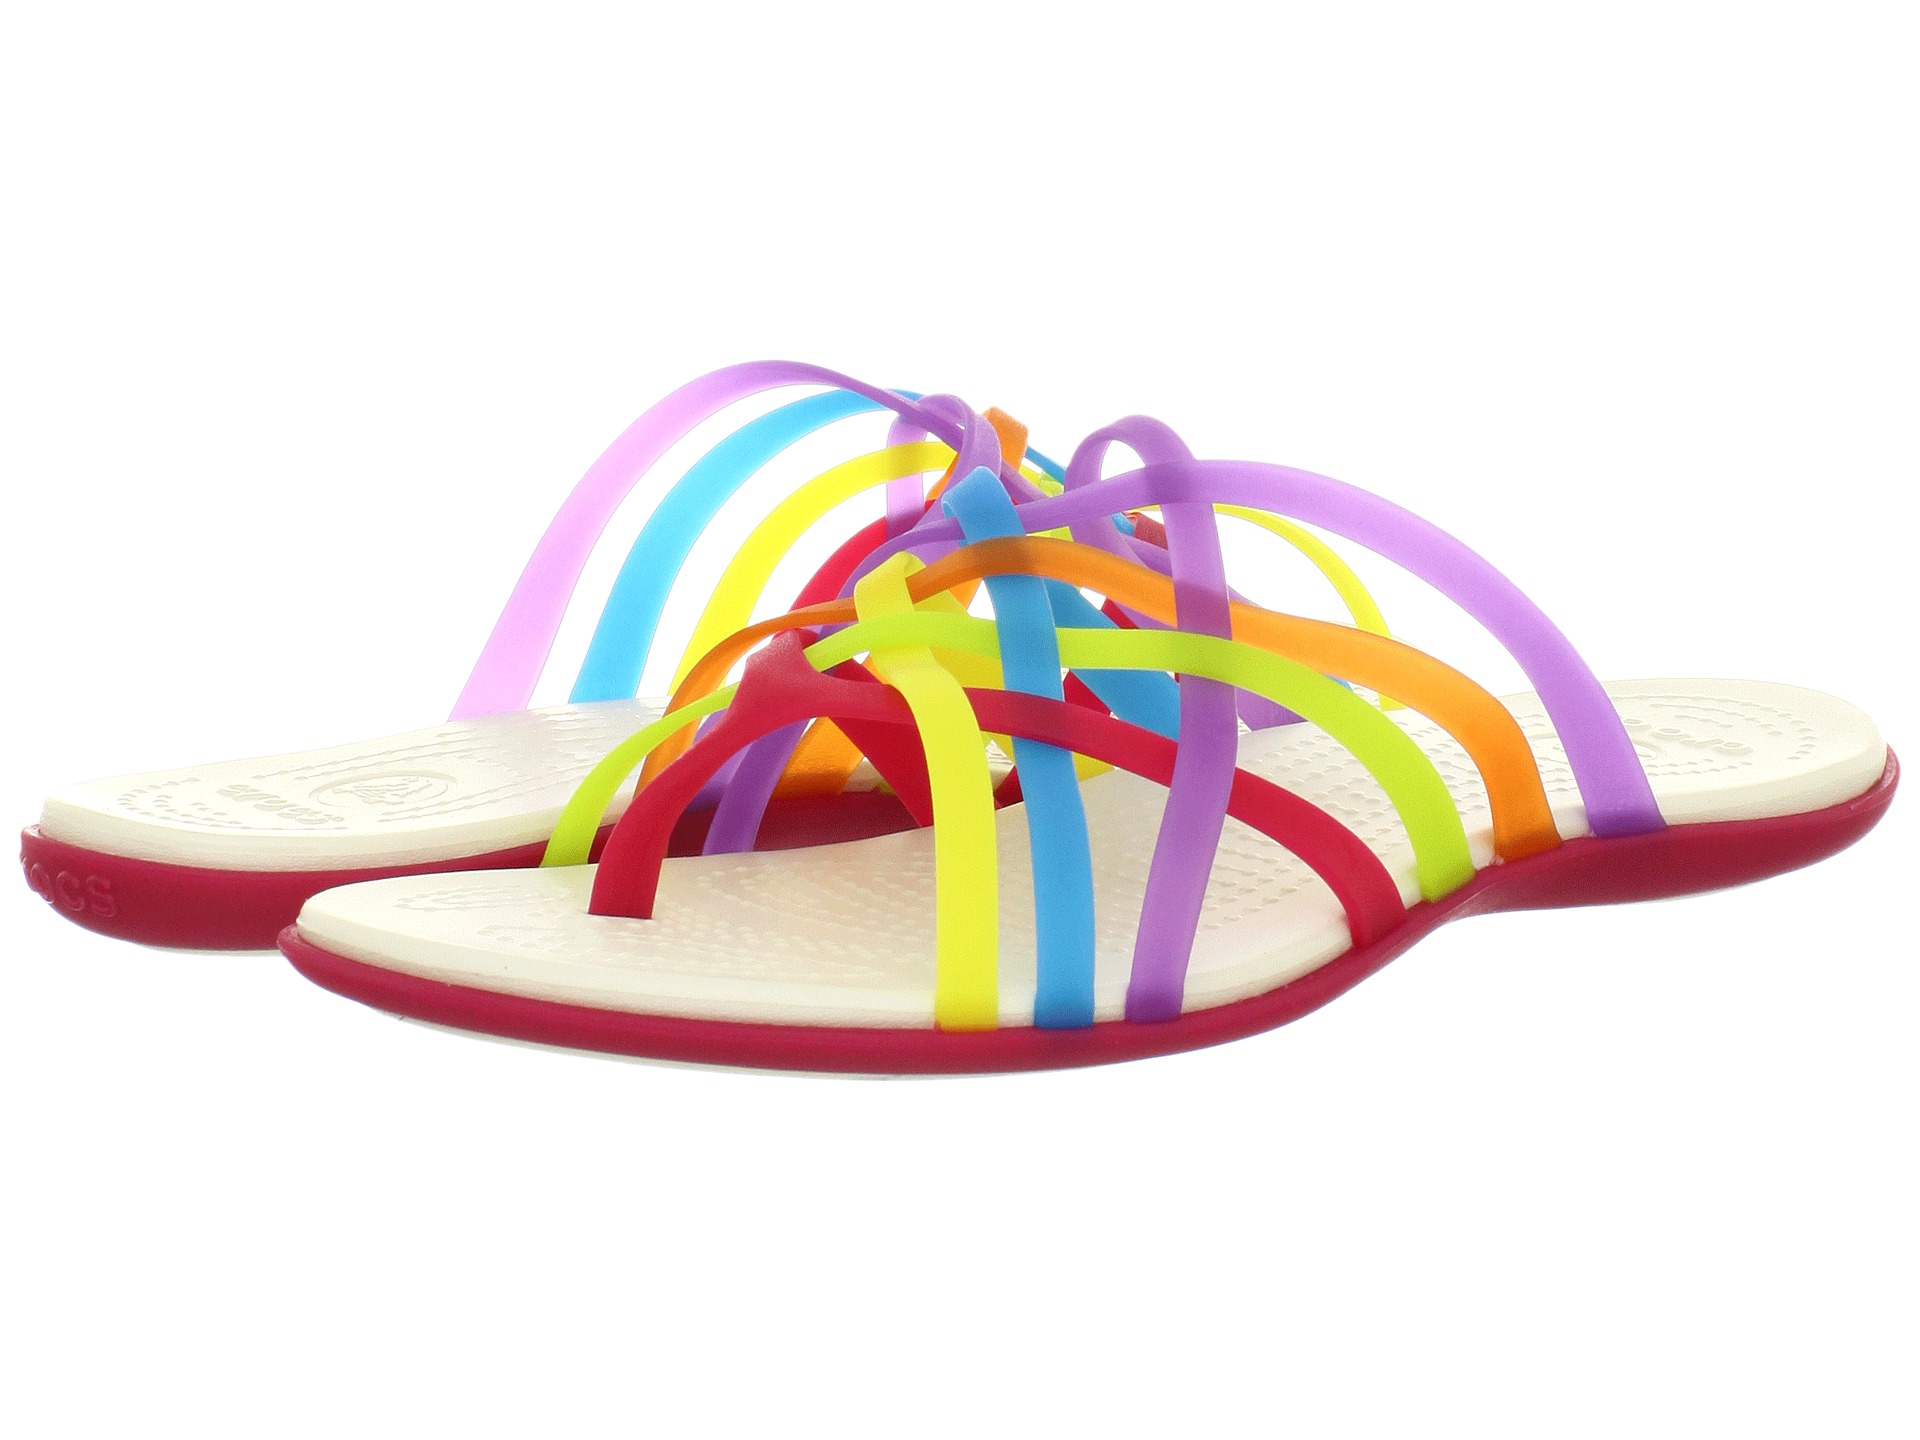 Crocs Huarache Flip Flop, Shoes | Shipped Free at Zappos